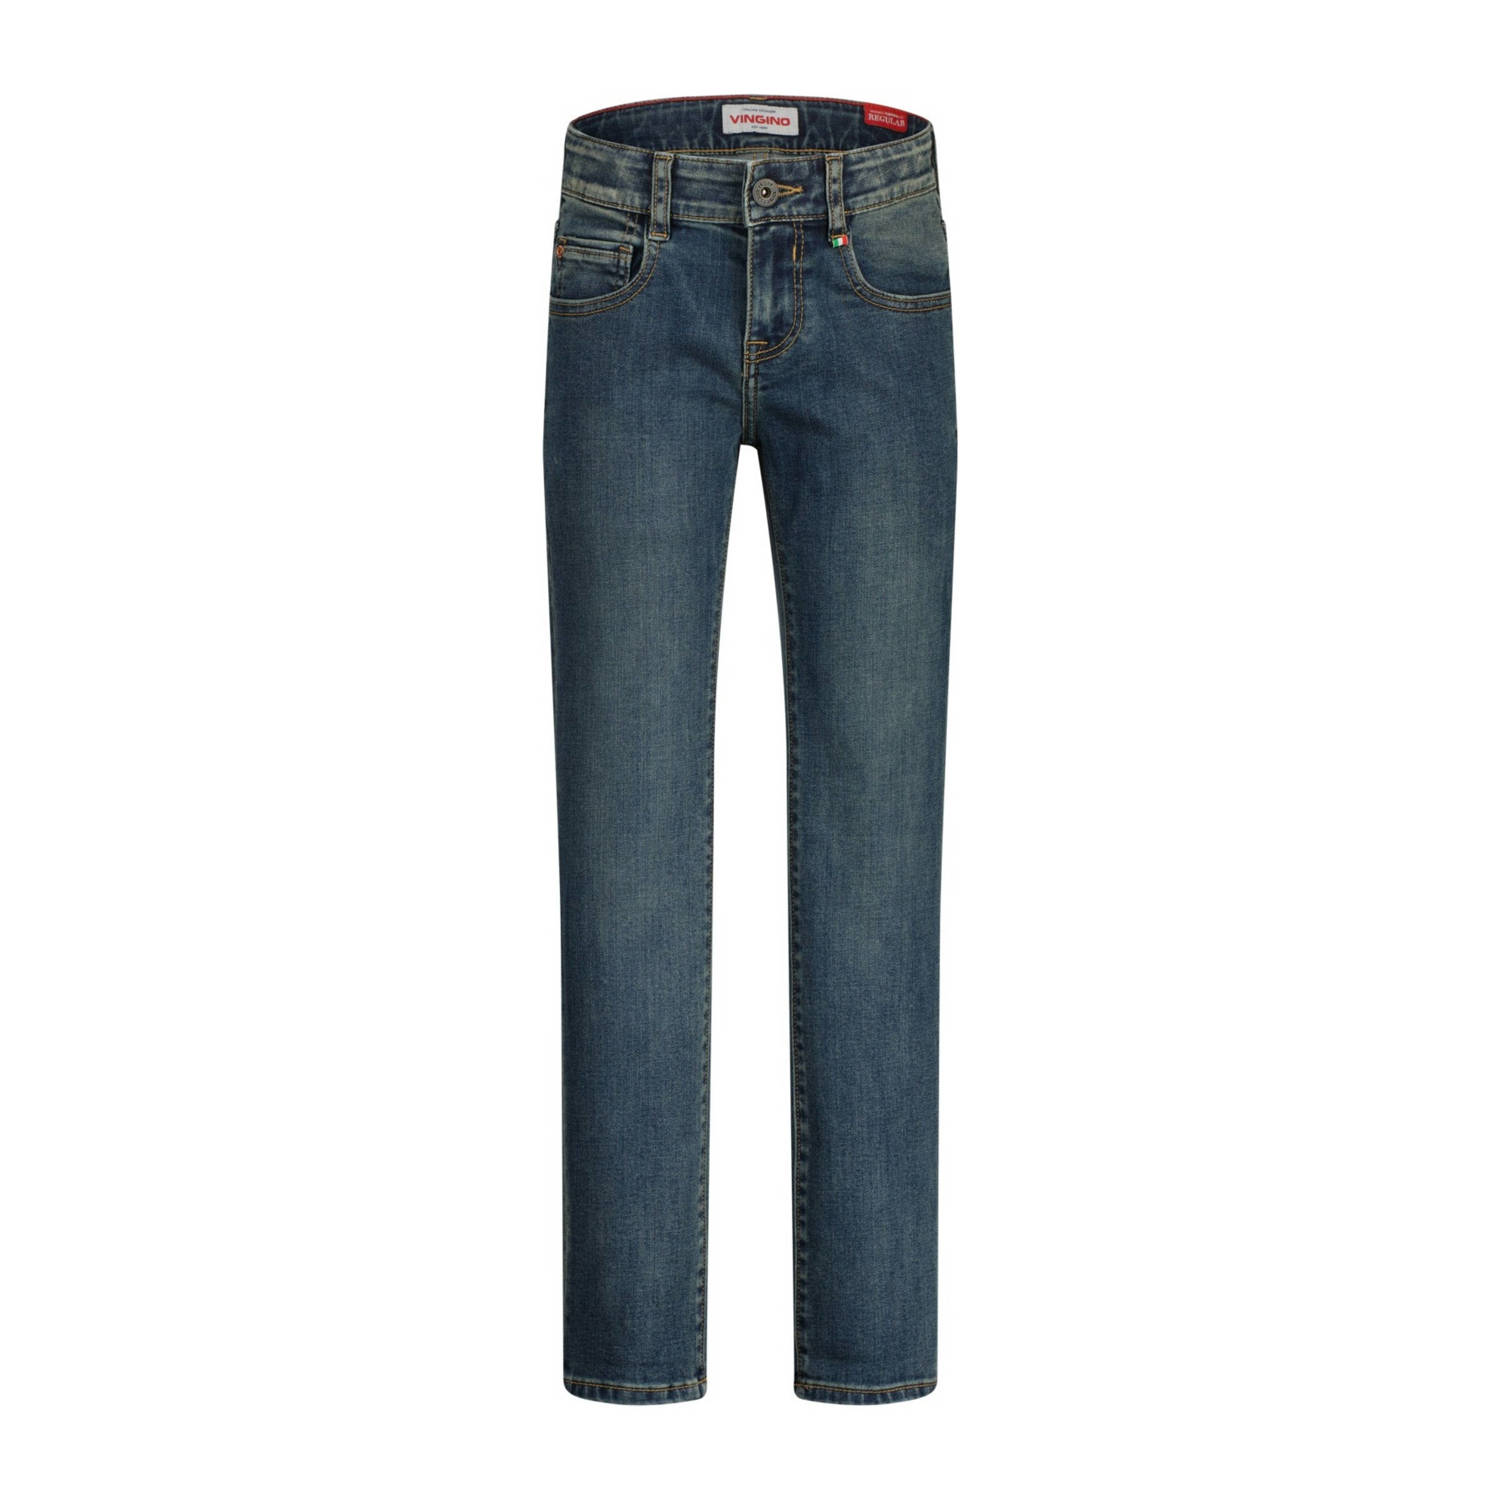 VINGINO regular fit jeans Baggio tinted mid blue Blauw Jongens Stretchdenim 116